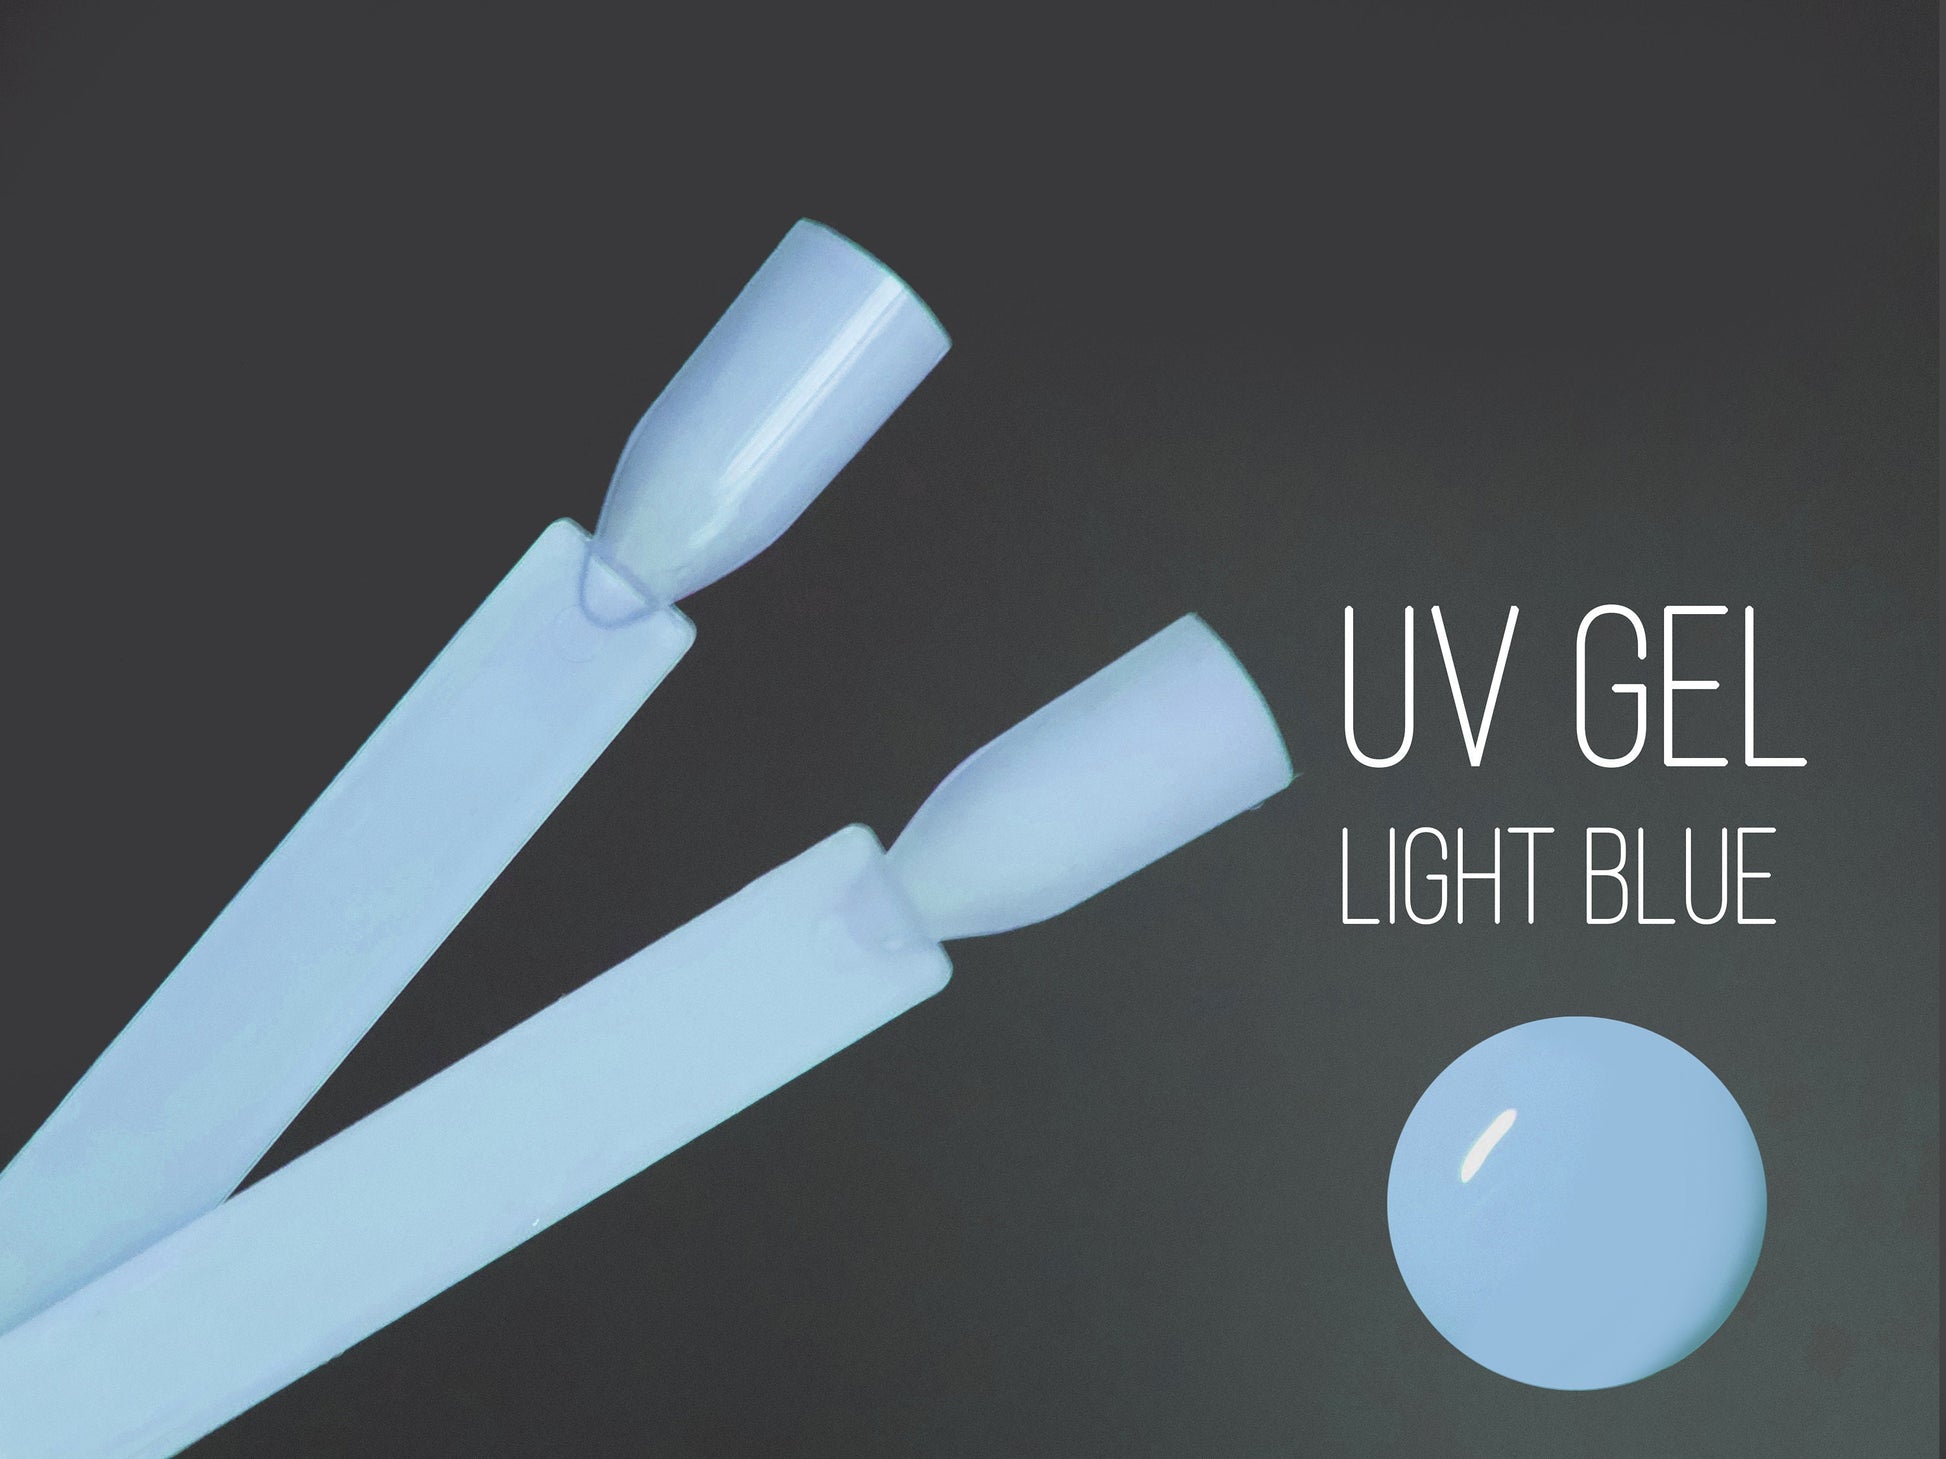 15ml Light Blue Gel polish/ Sky Blue Pure Solid color Nails/ Pastel Baby blue Soak off UV/Led Gel polish Manicure Pedicure